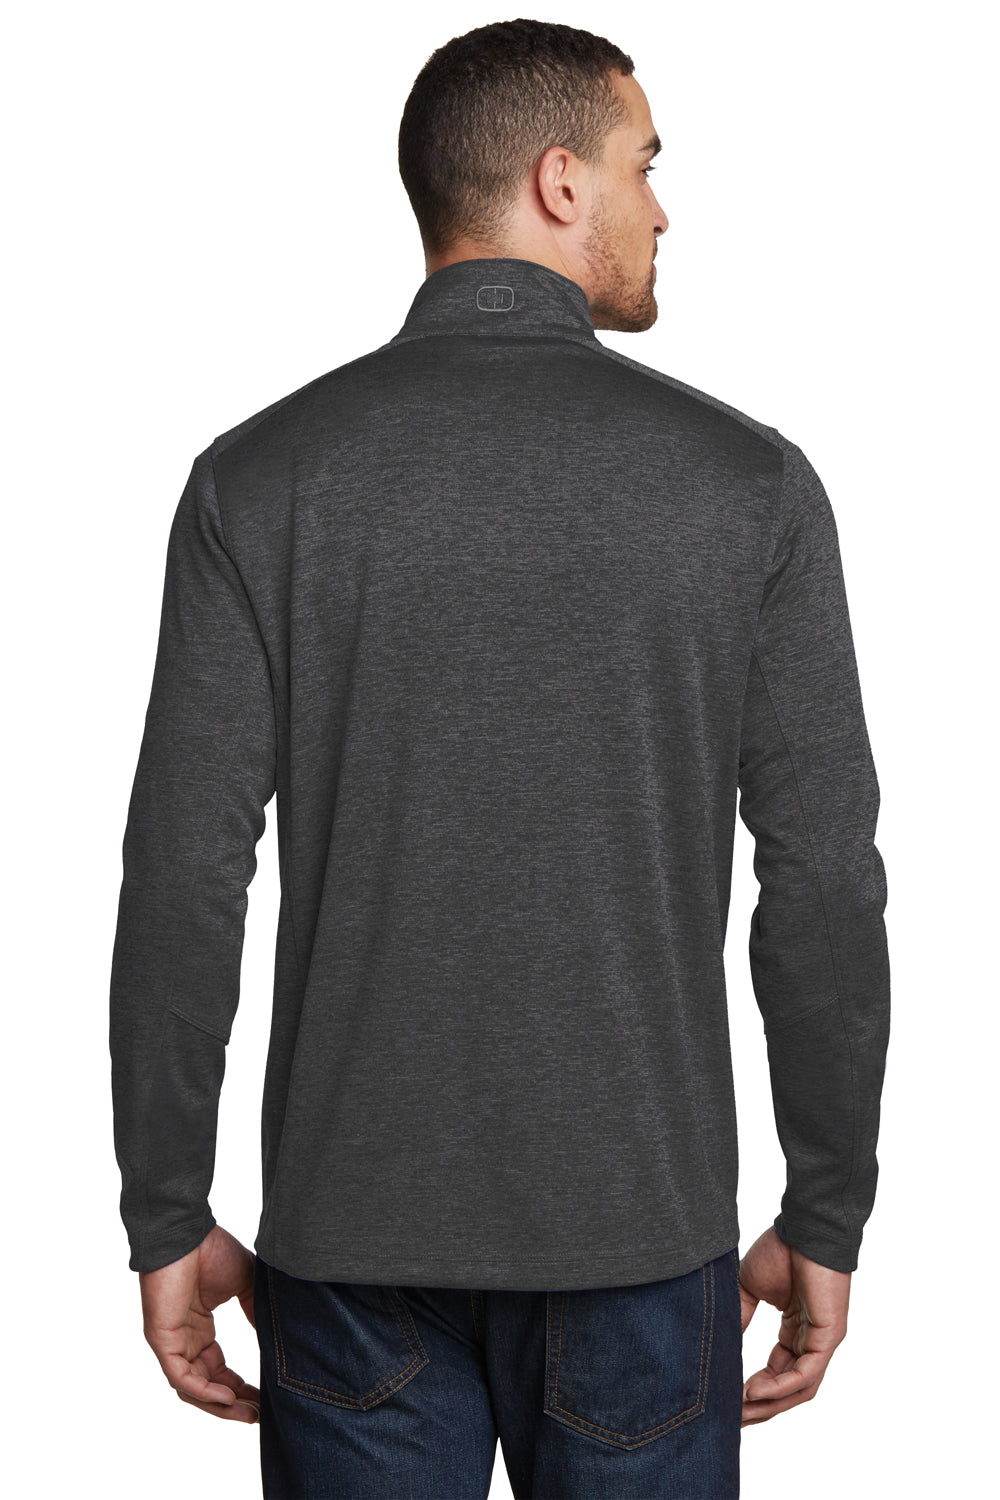 Ogio OG202 Mens Pixel Moisture Wicking 1/4 Zip Sweatshirt Black Back